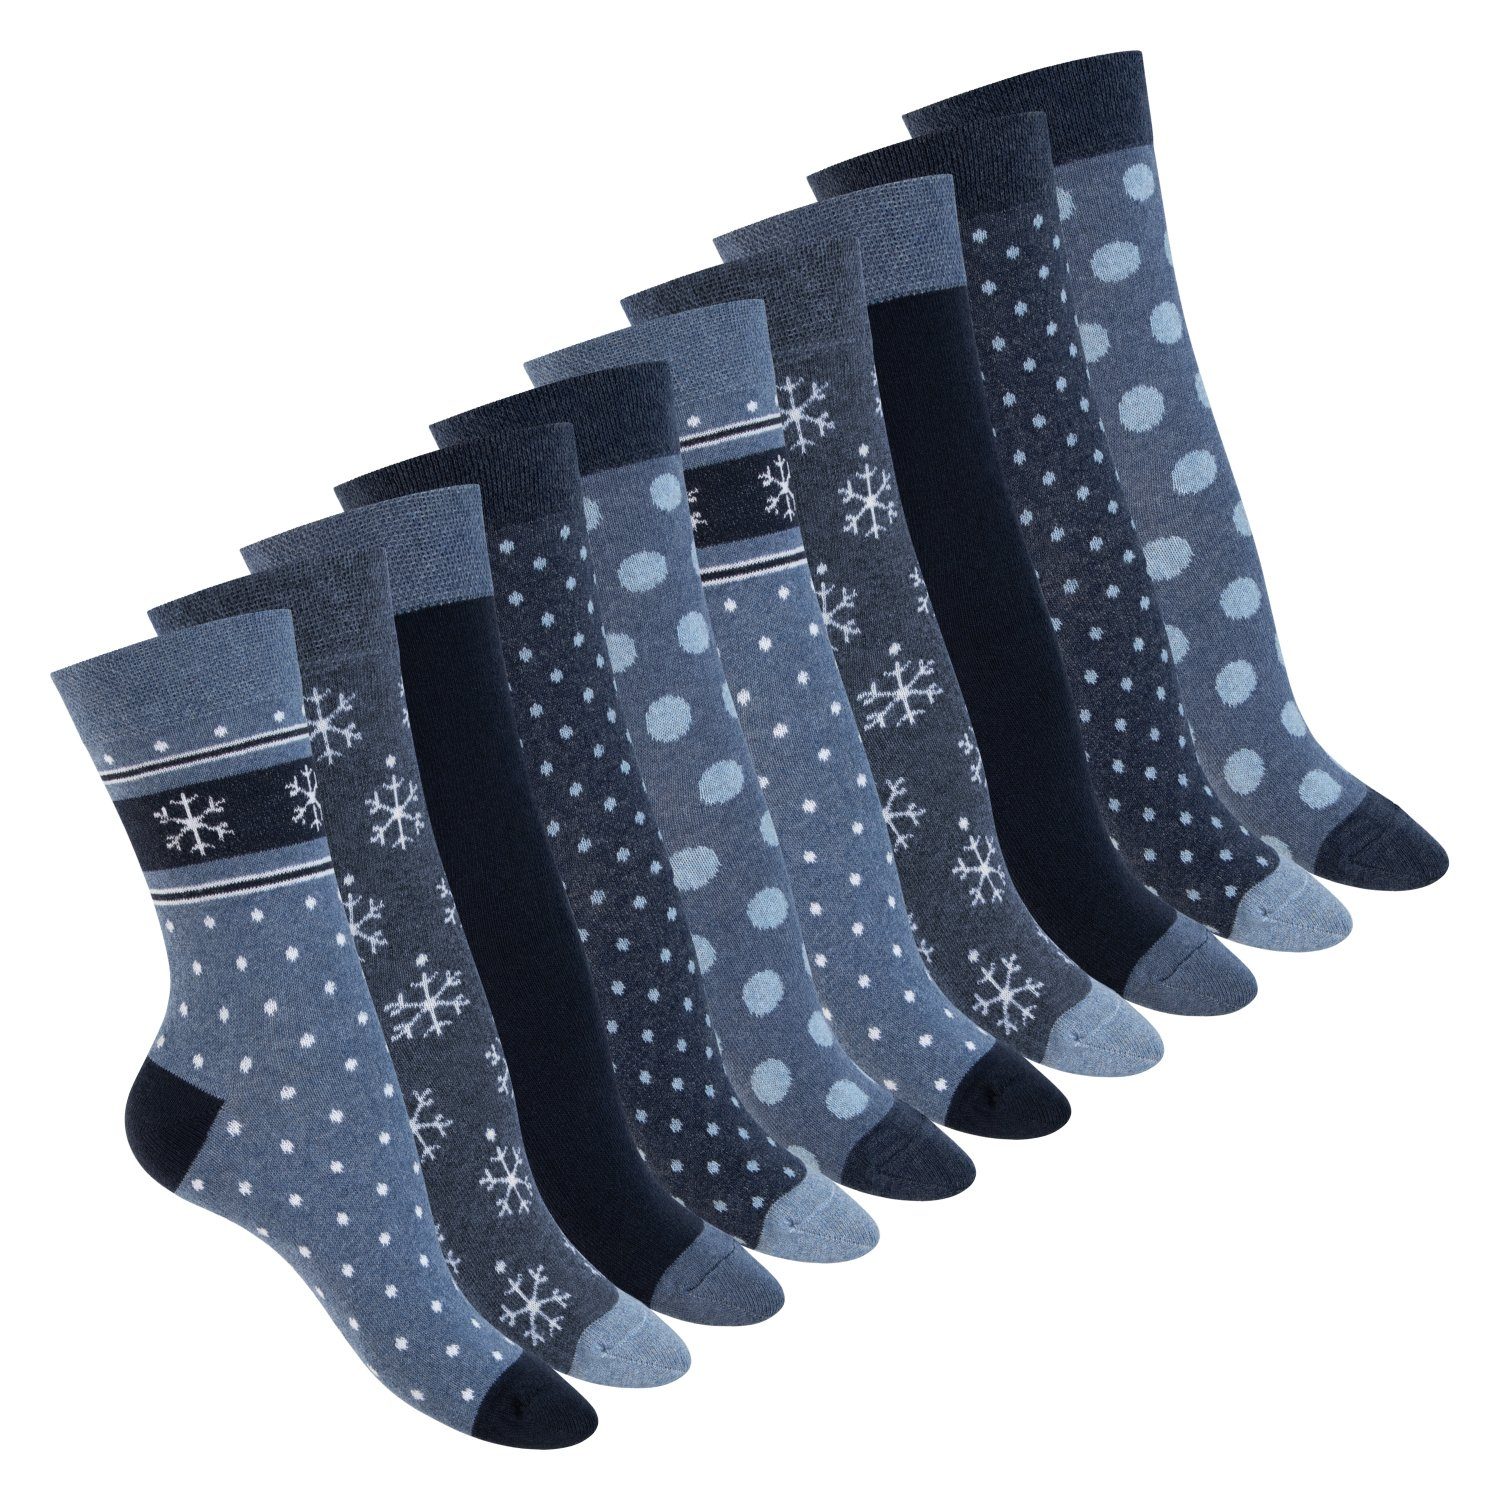 (10 regenerative Baumwolle Paar), Damen Basicsocken Motiv Blue Eco Süße Socken celodoro Navy mit